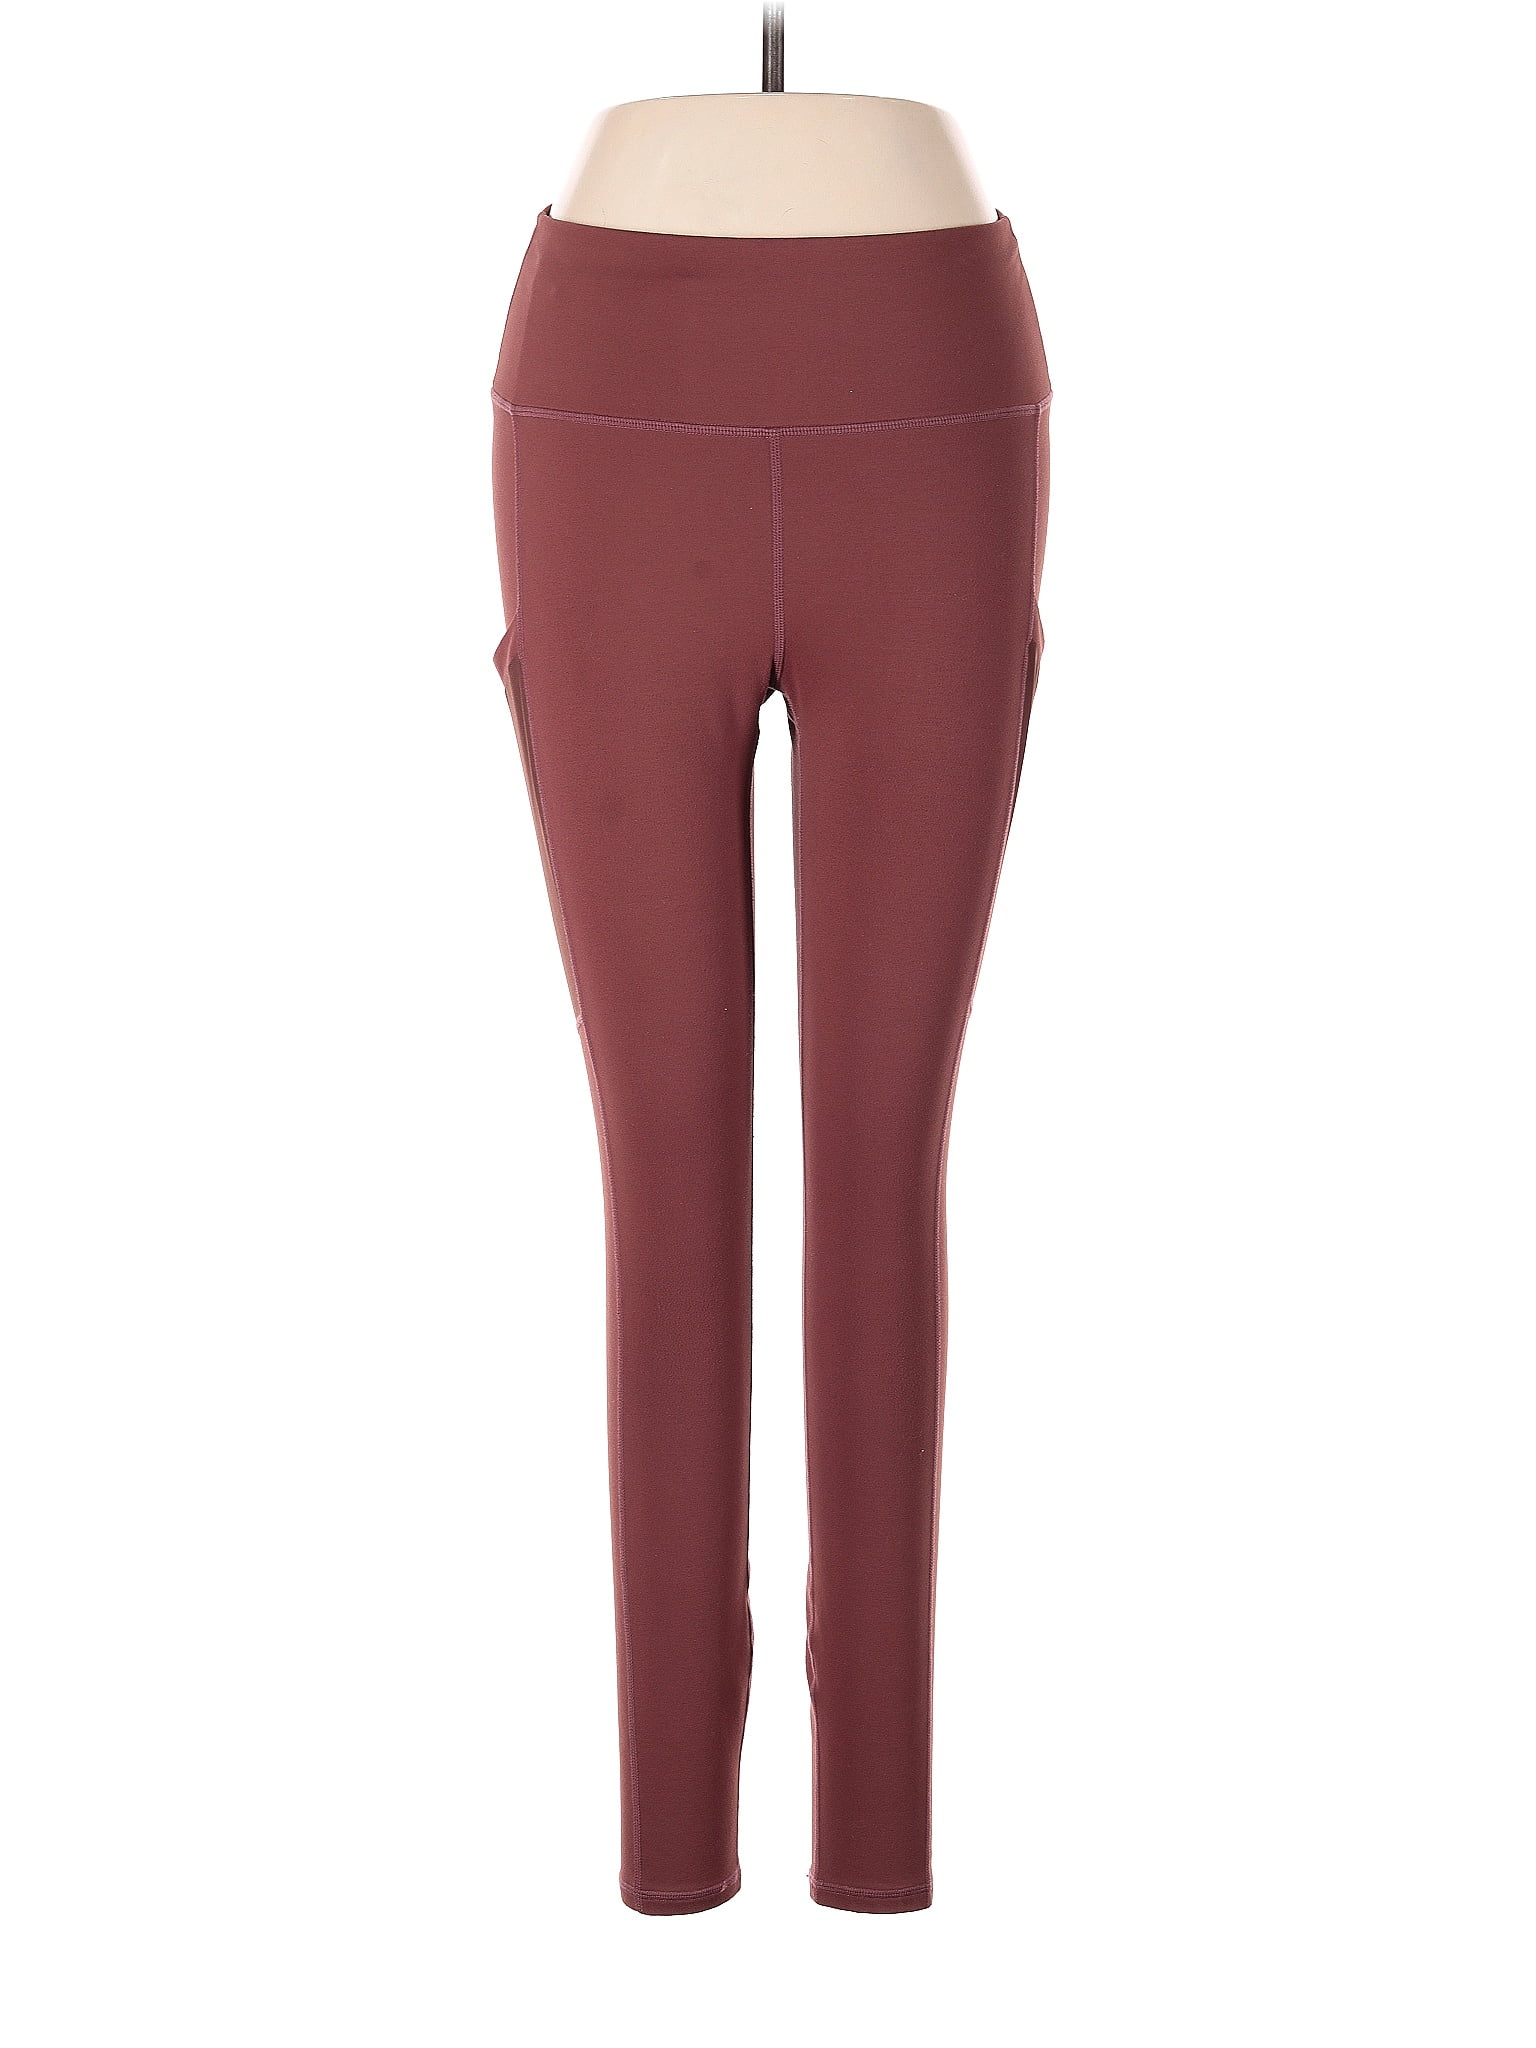 Fabletics Pink Active Pants Size XL - 58% off